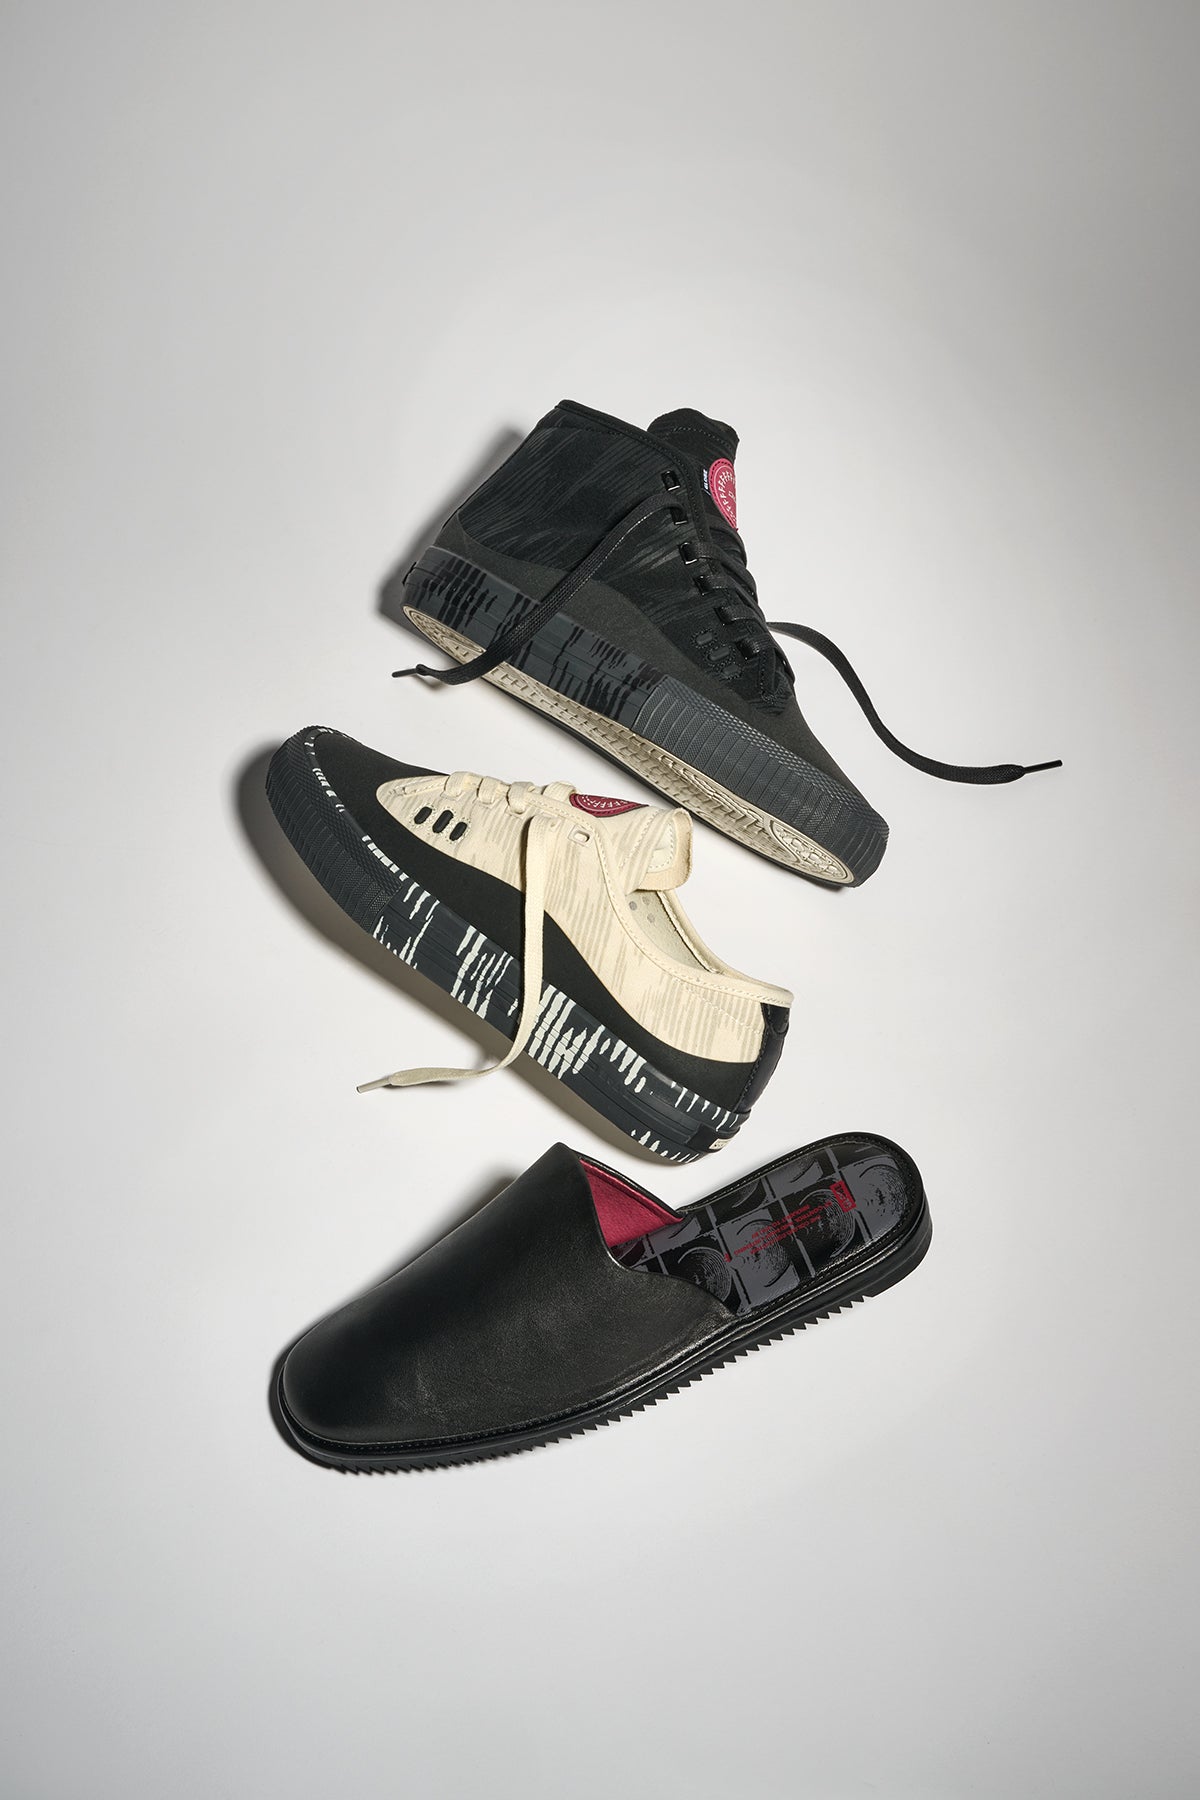 Pantolette schwarz ehemalige skateboard Schuhe